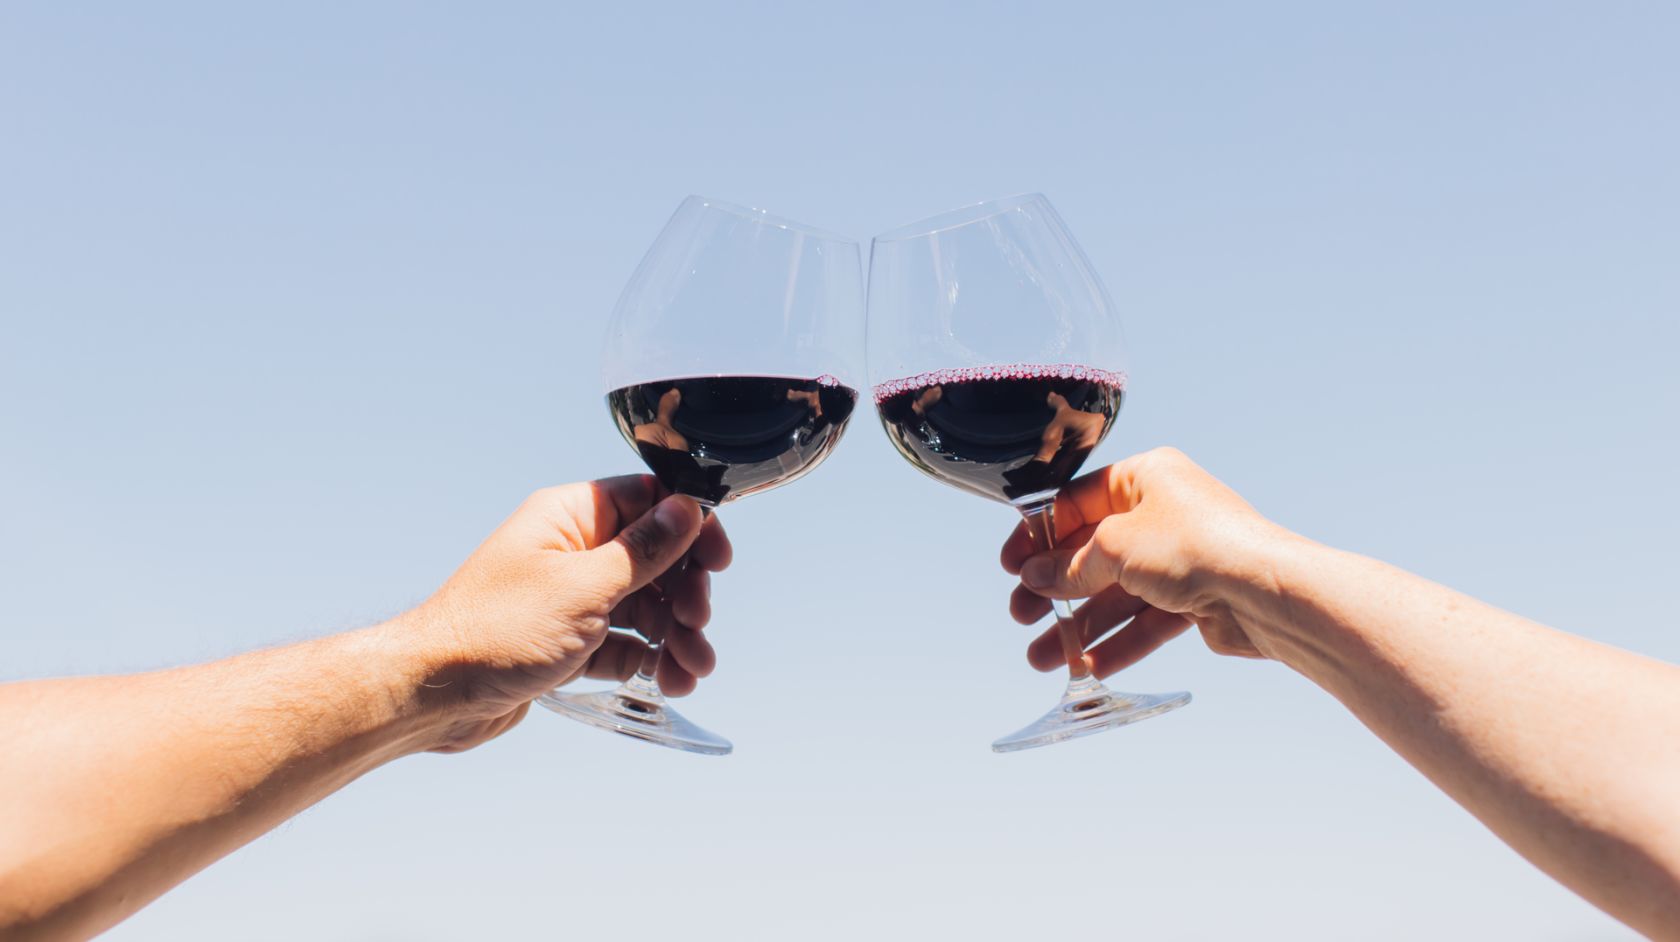 A Few Hands Holding Wine Glasses